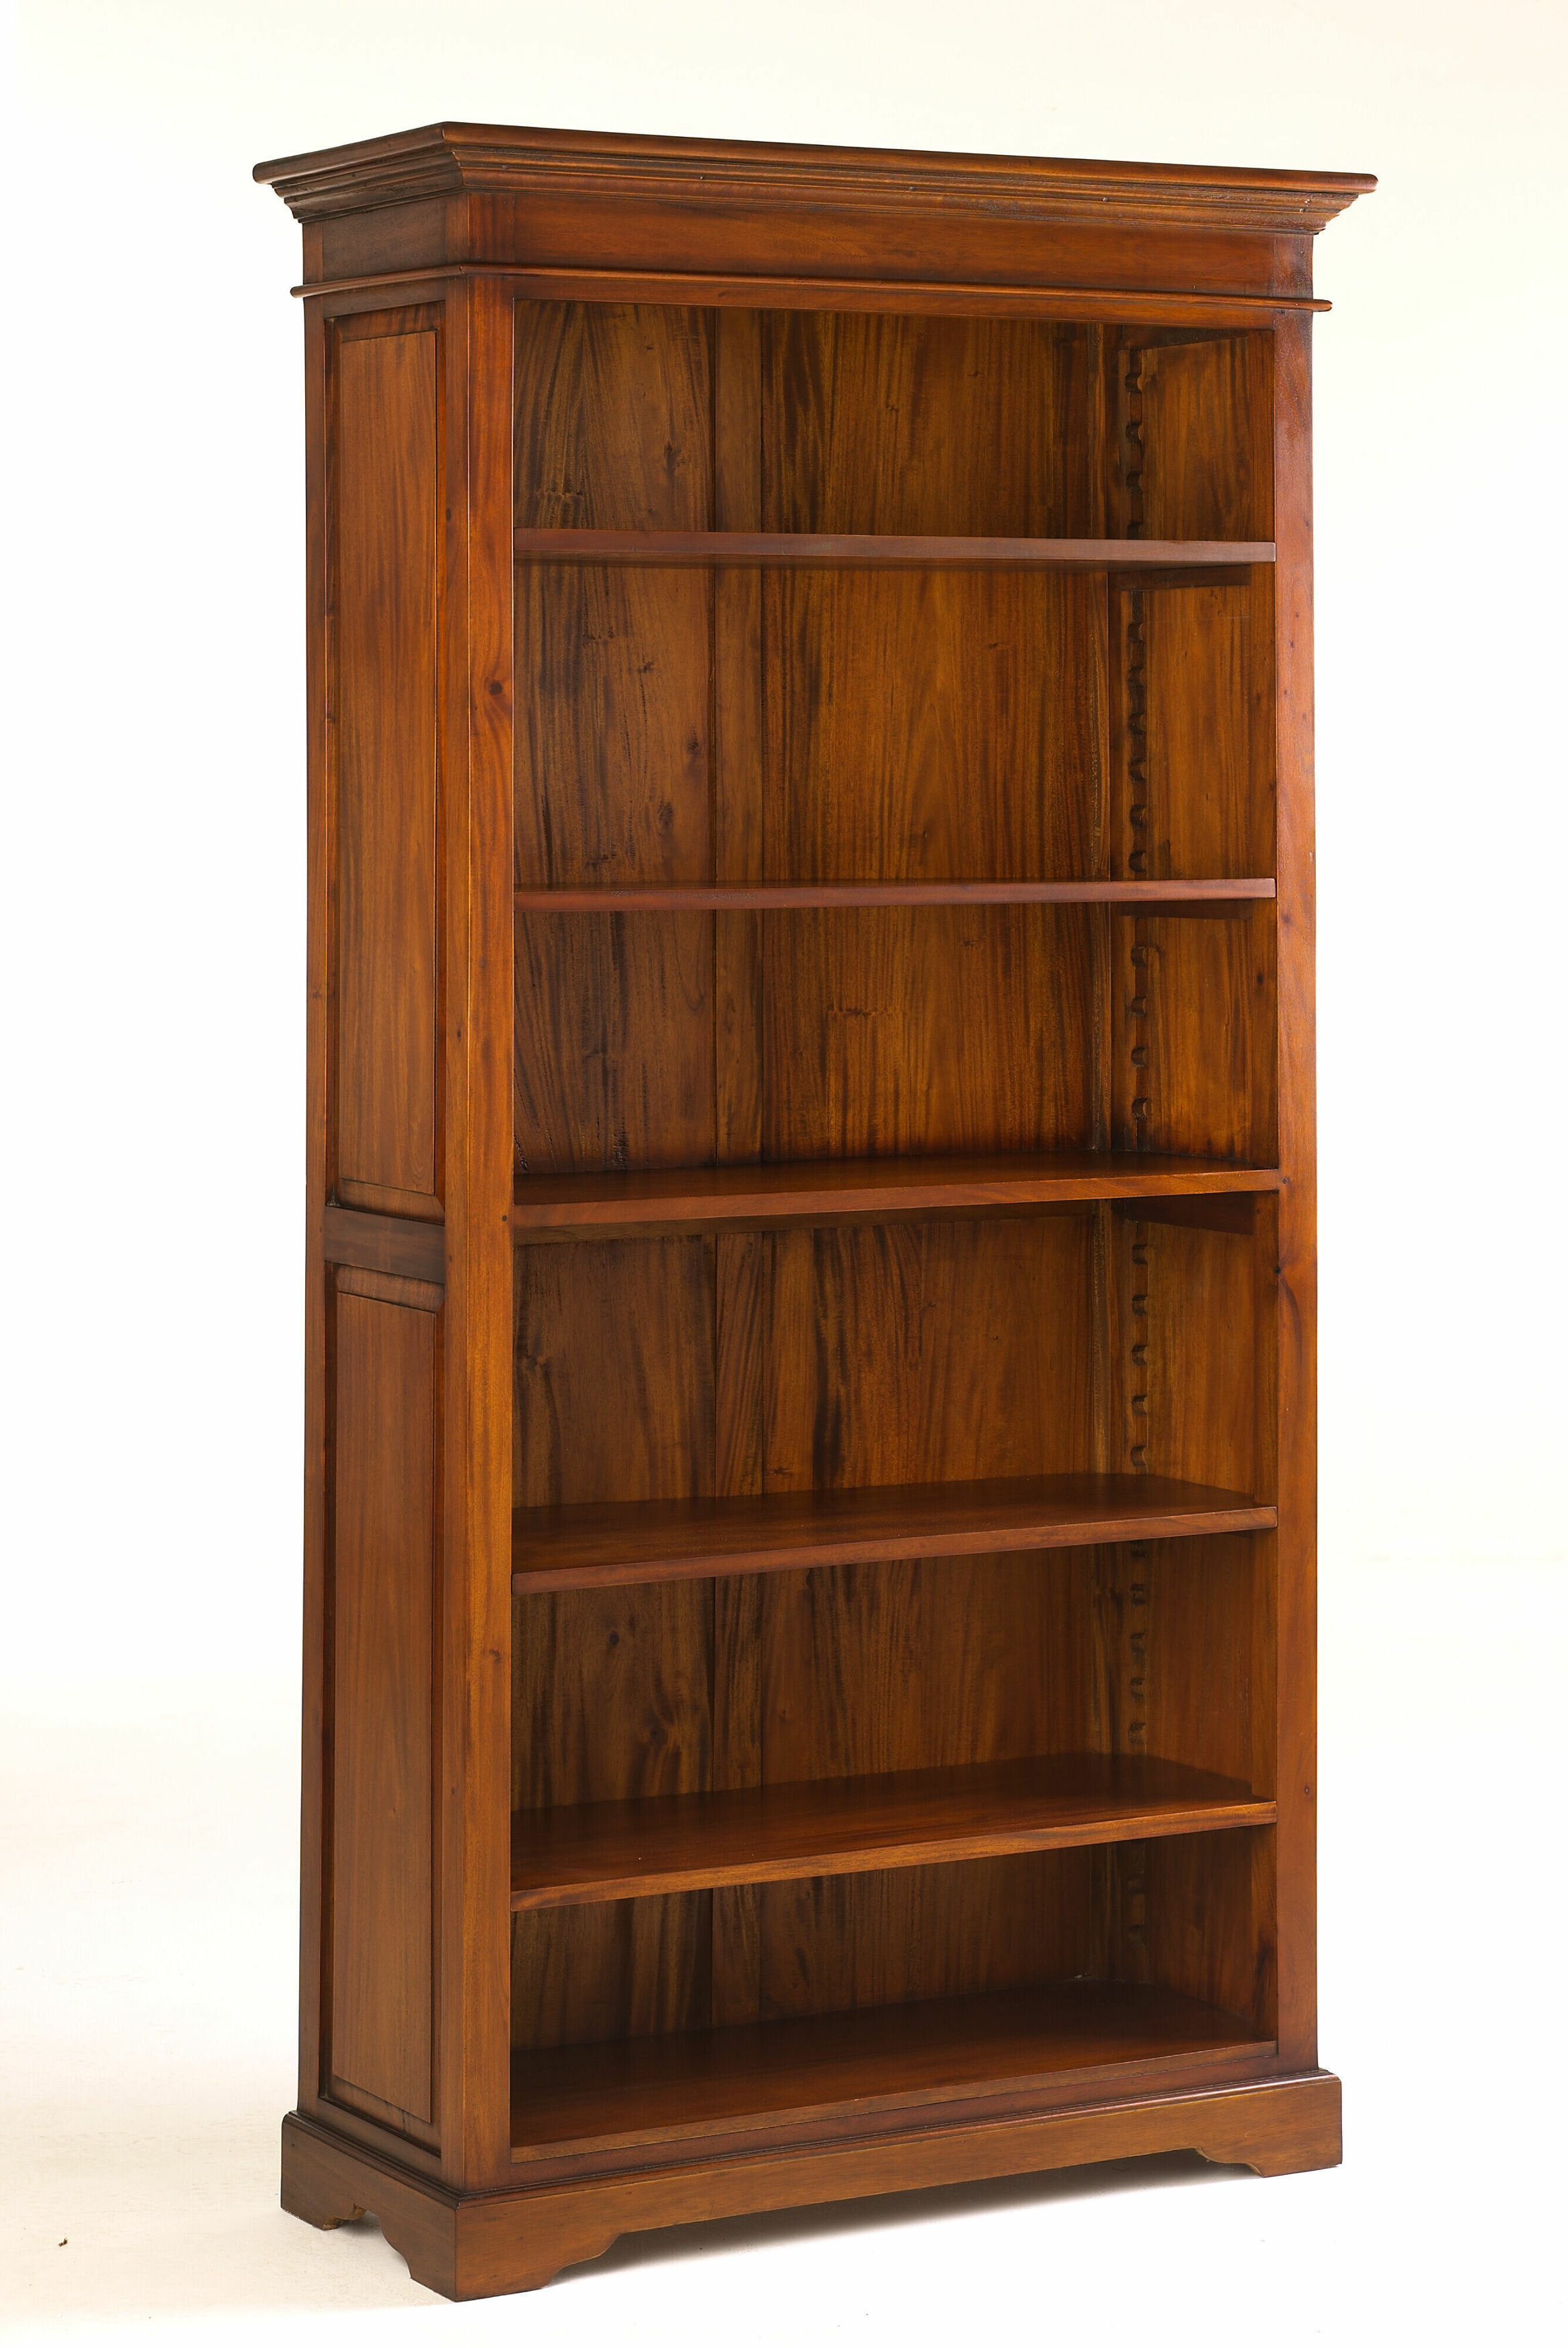 Rosalind Wheeler Adlington Solid Wood Bookcase Reviews Wayfair